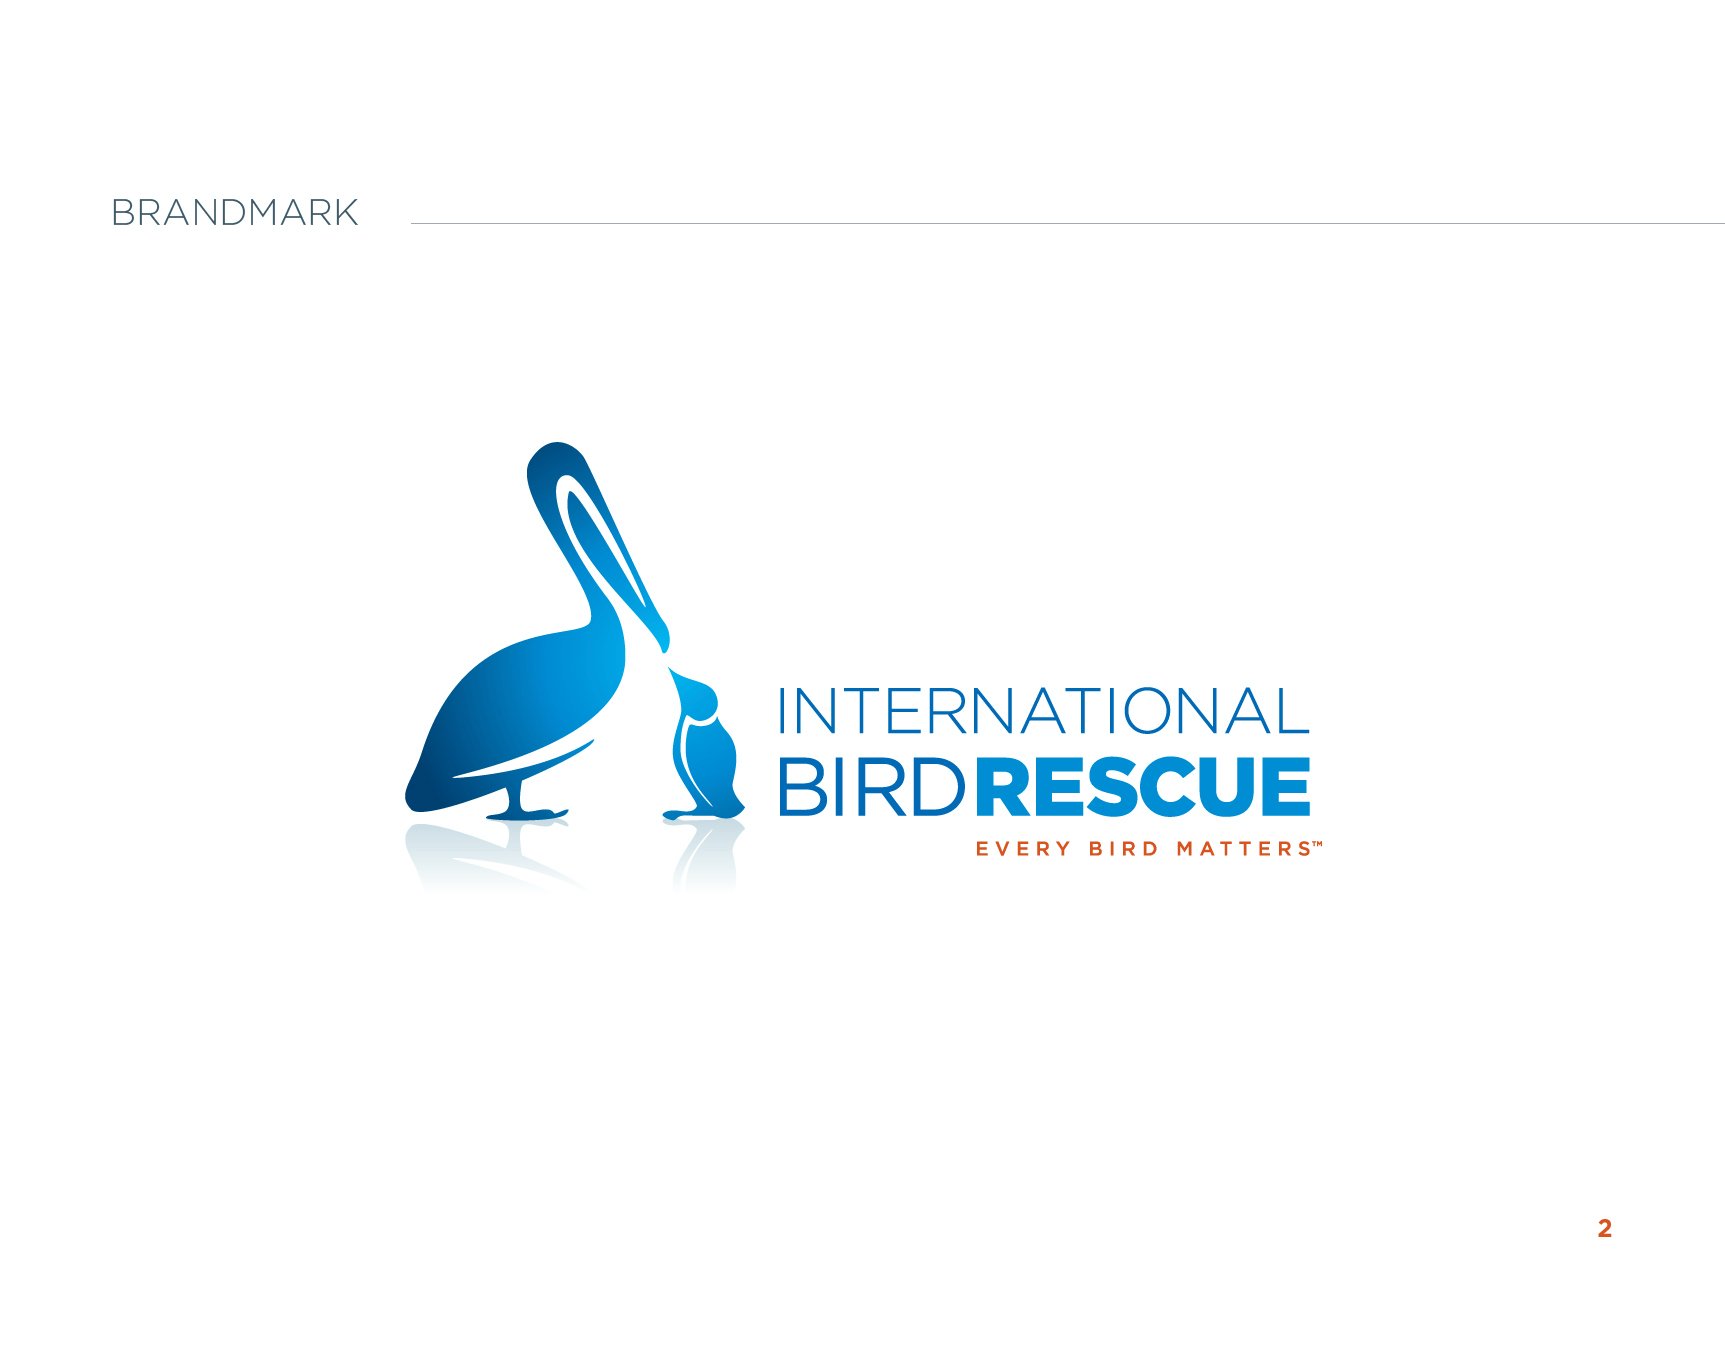 InternationalBirdRescue_Guidelines-04.jpeg